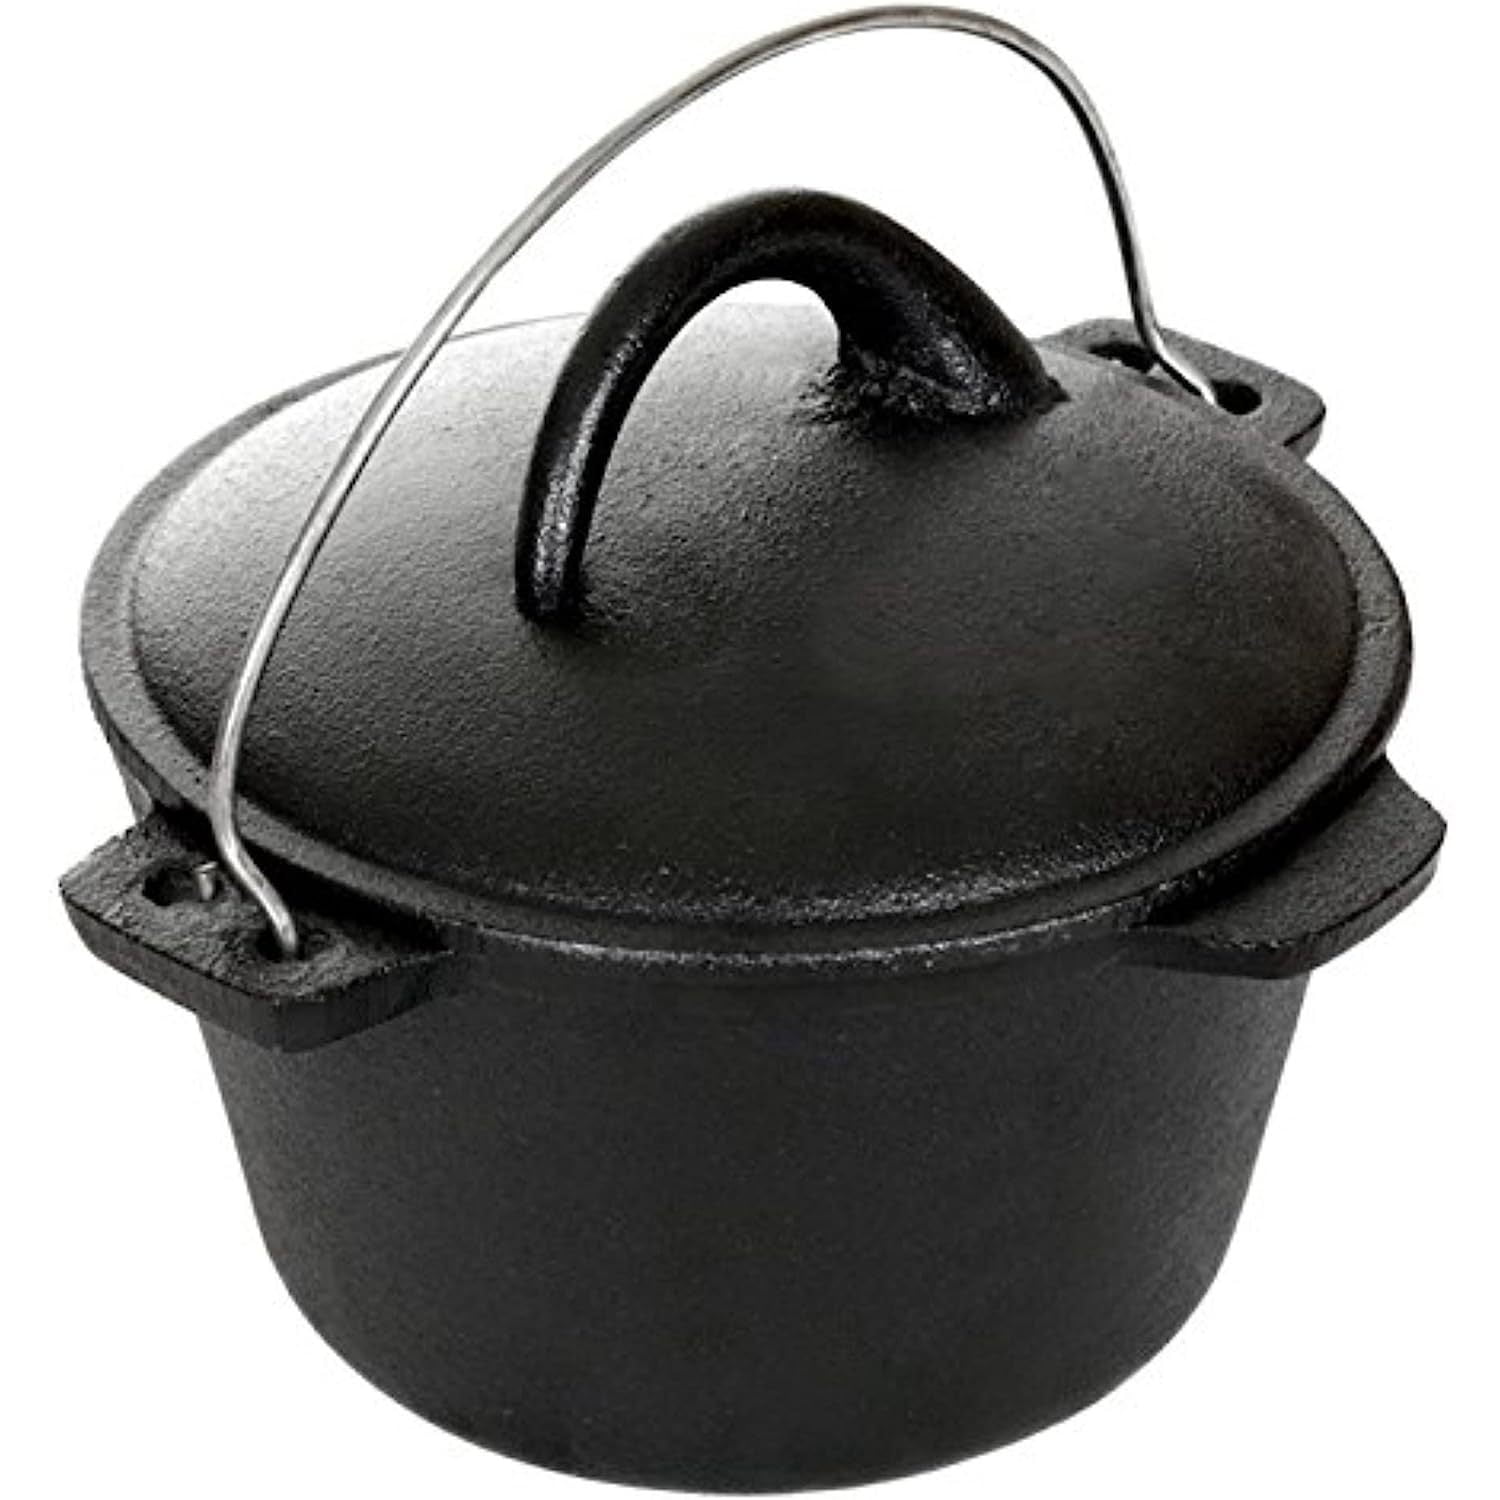 Cajun Classic 3-Quart Seasoned Cast Iron Sauce Pot - GL10491BS